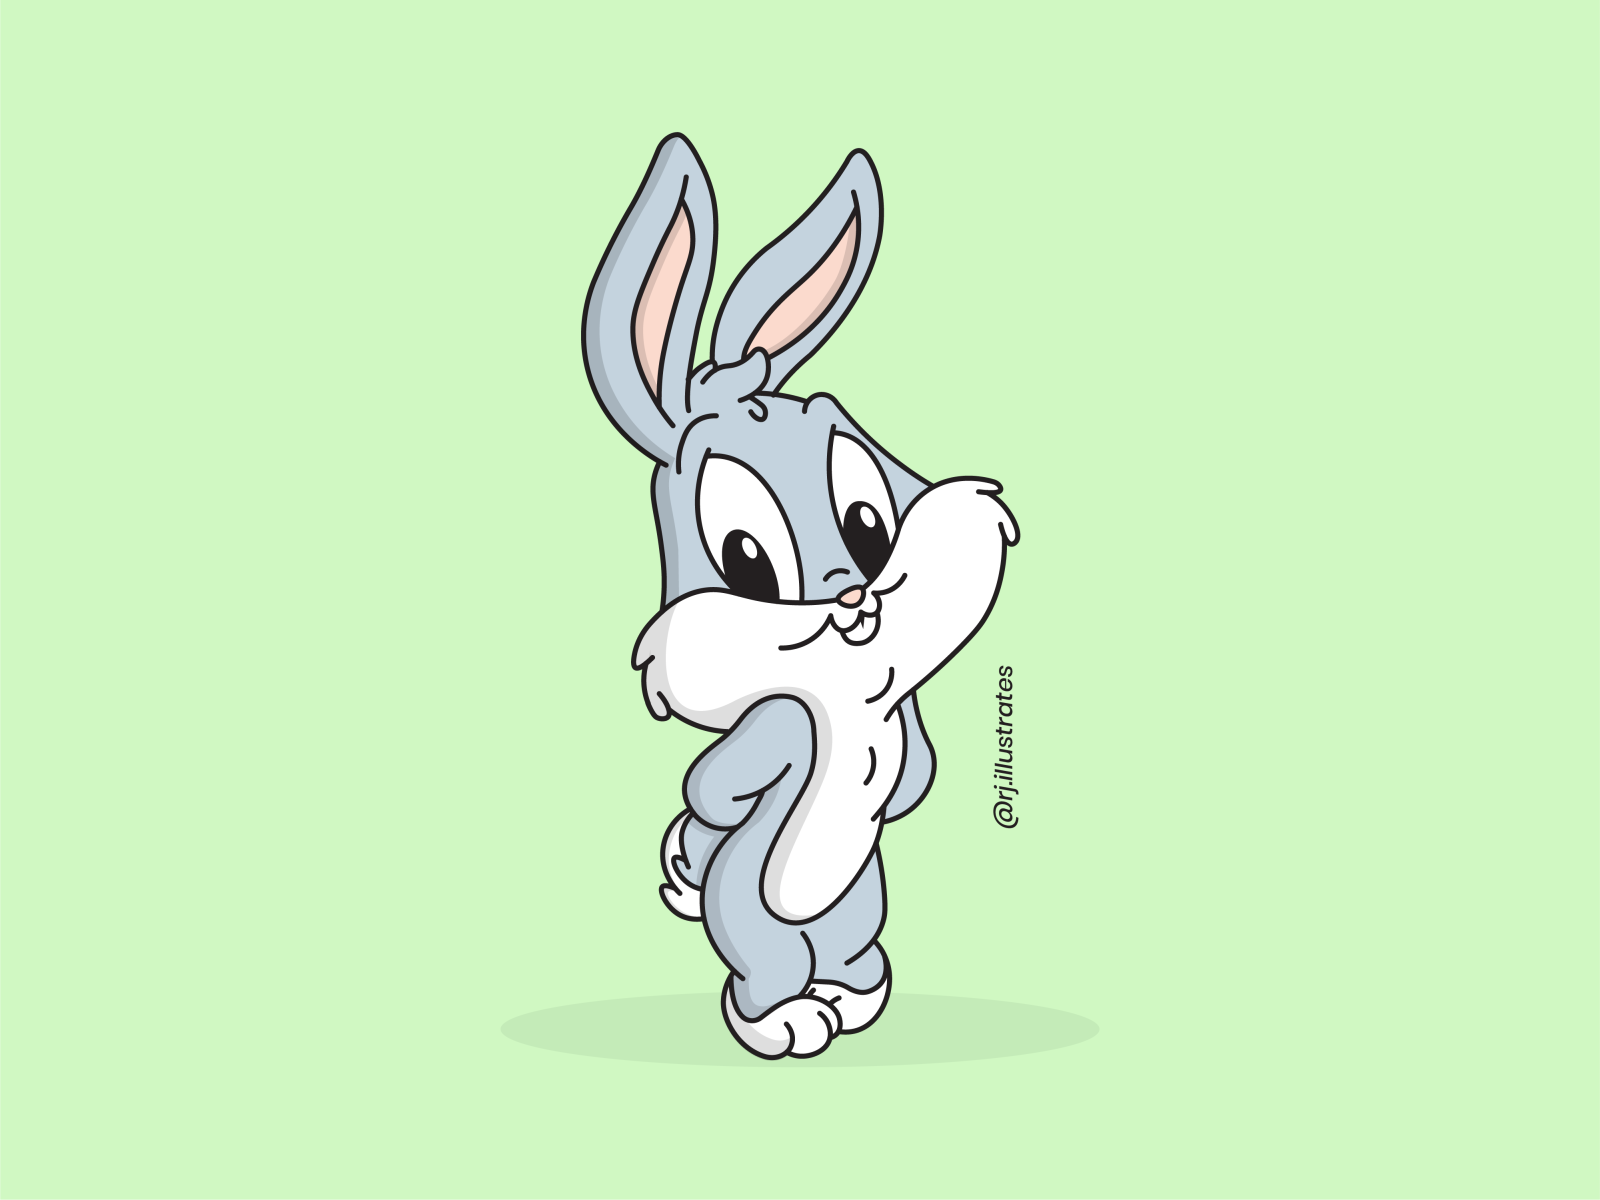 Baby bugs bunny illustration by Ronak Jadhavrao on Dribbble